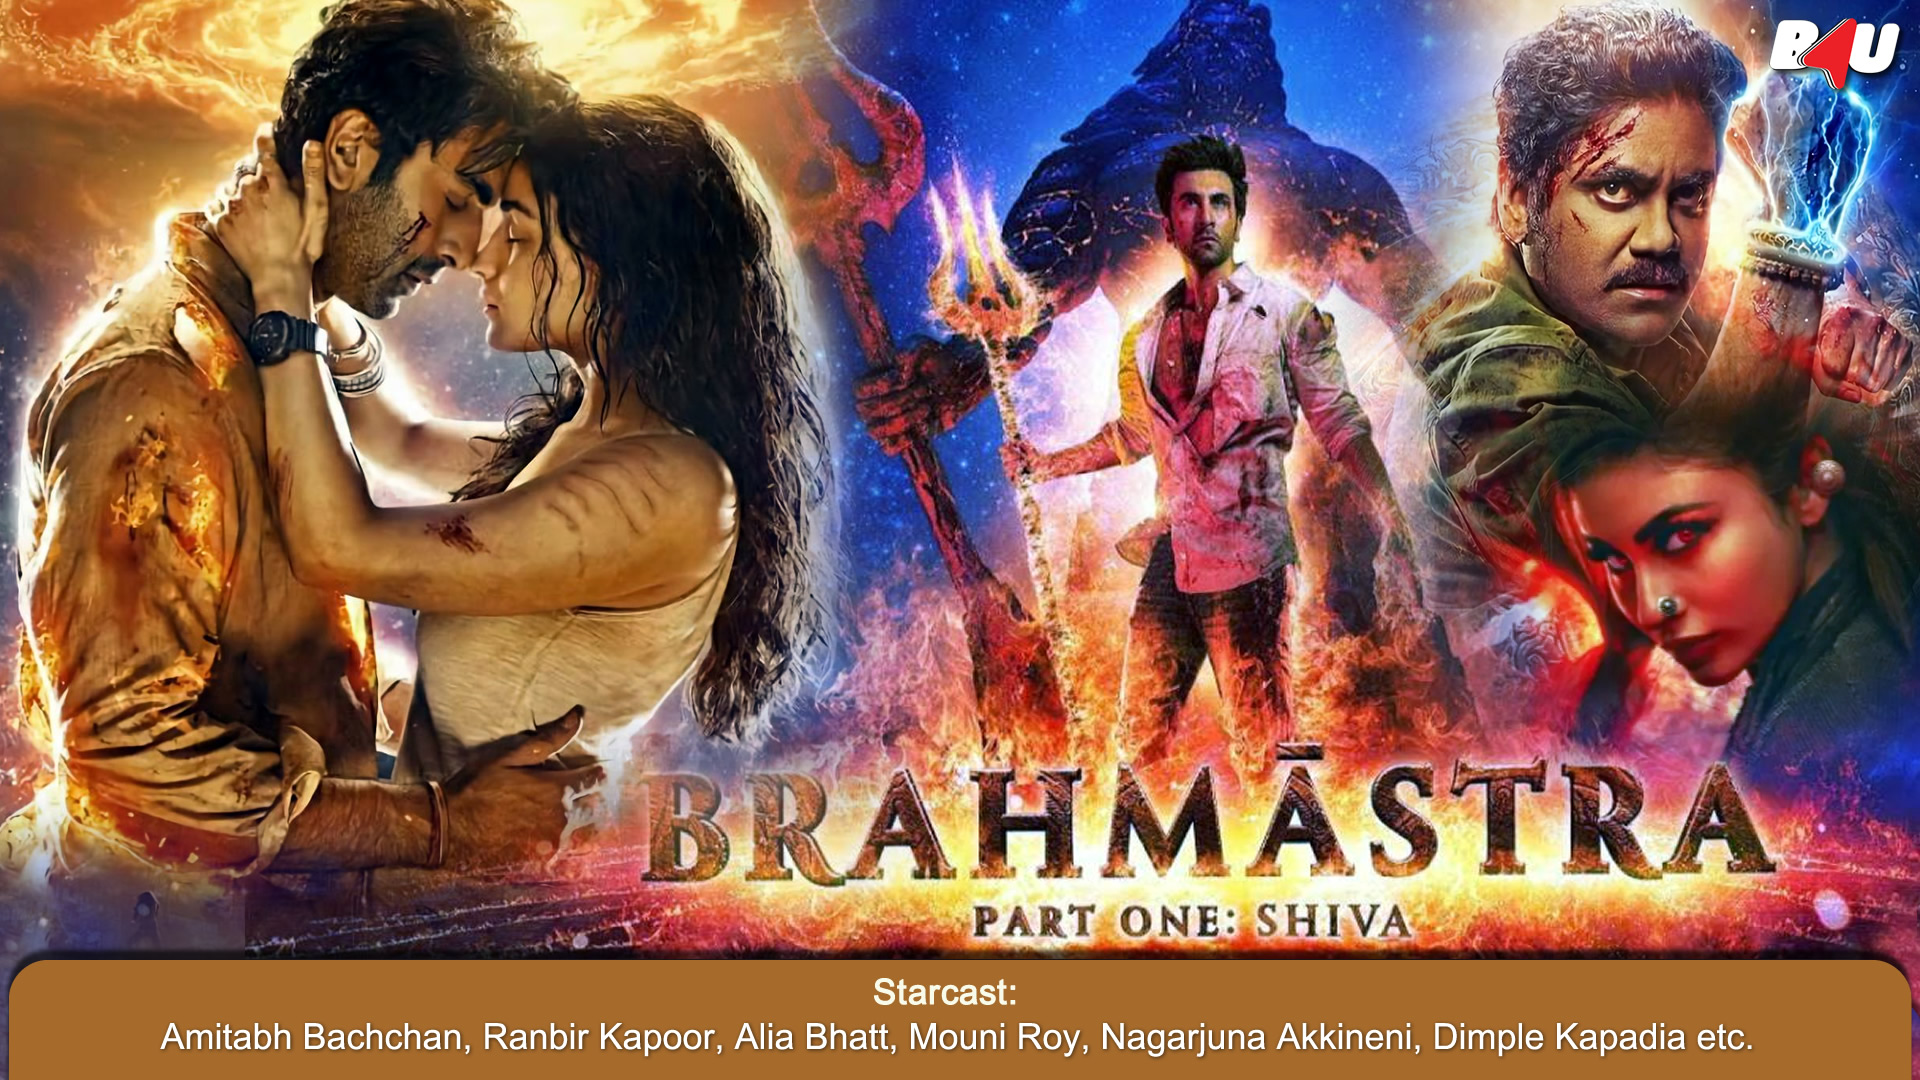 Brahmastra: Part One - Shiva